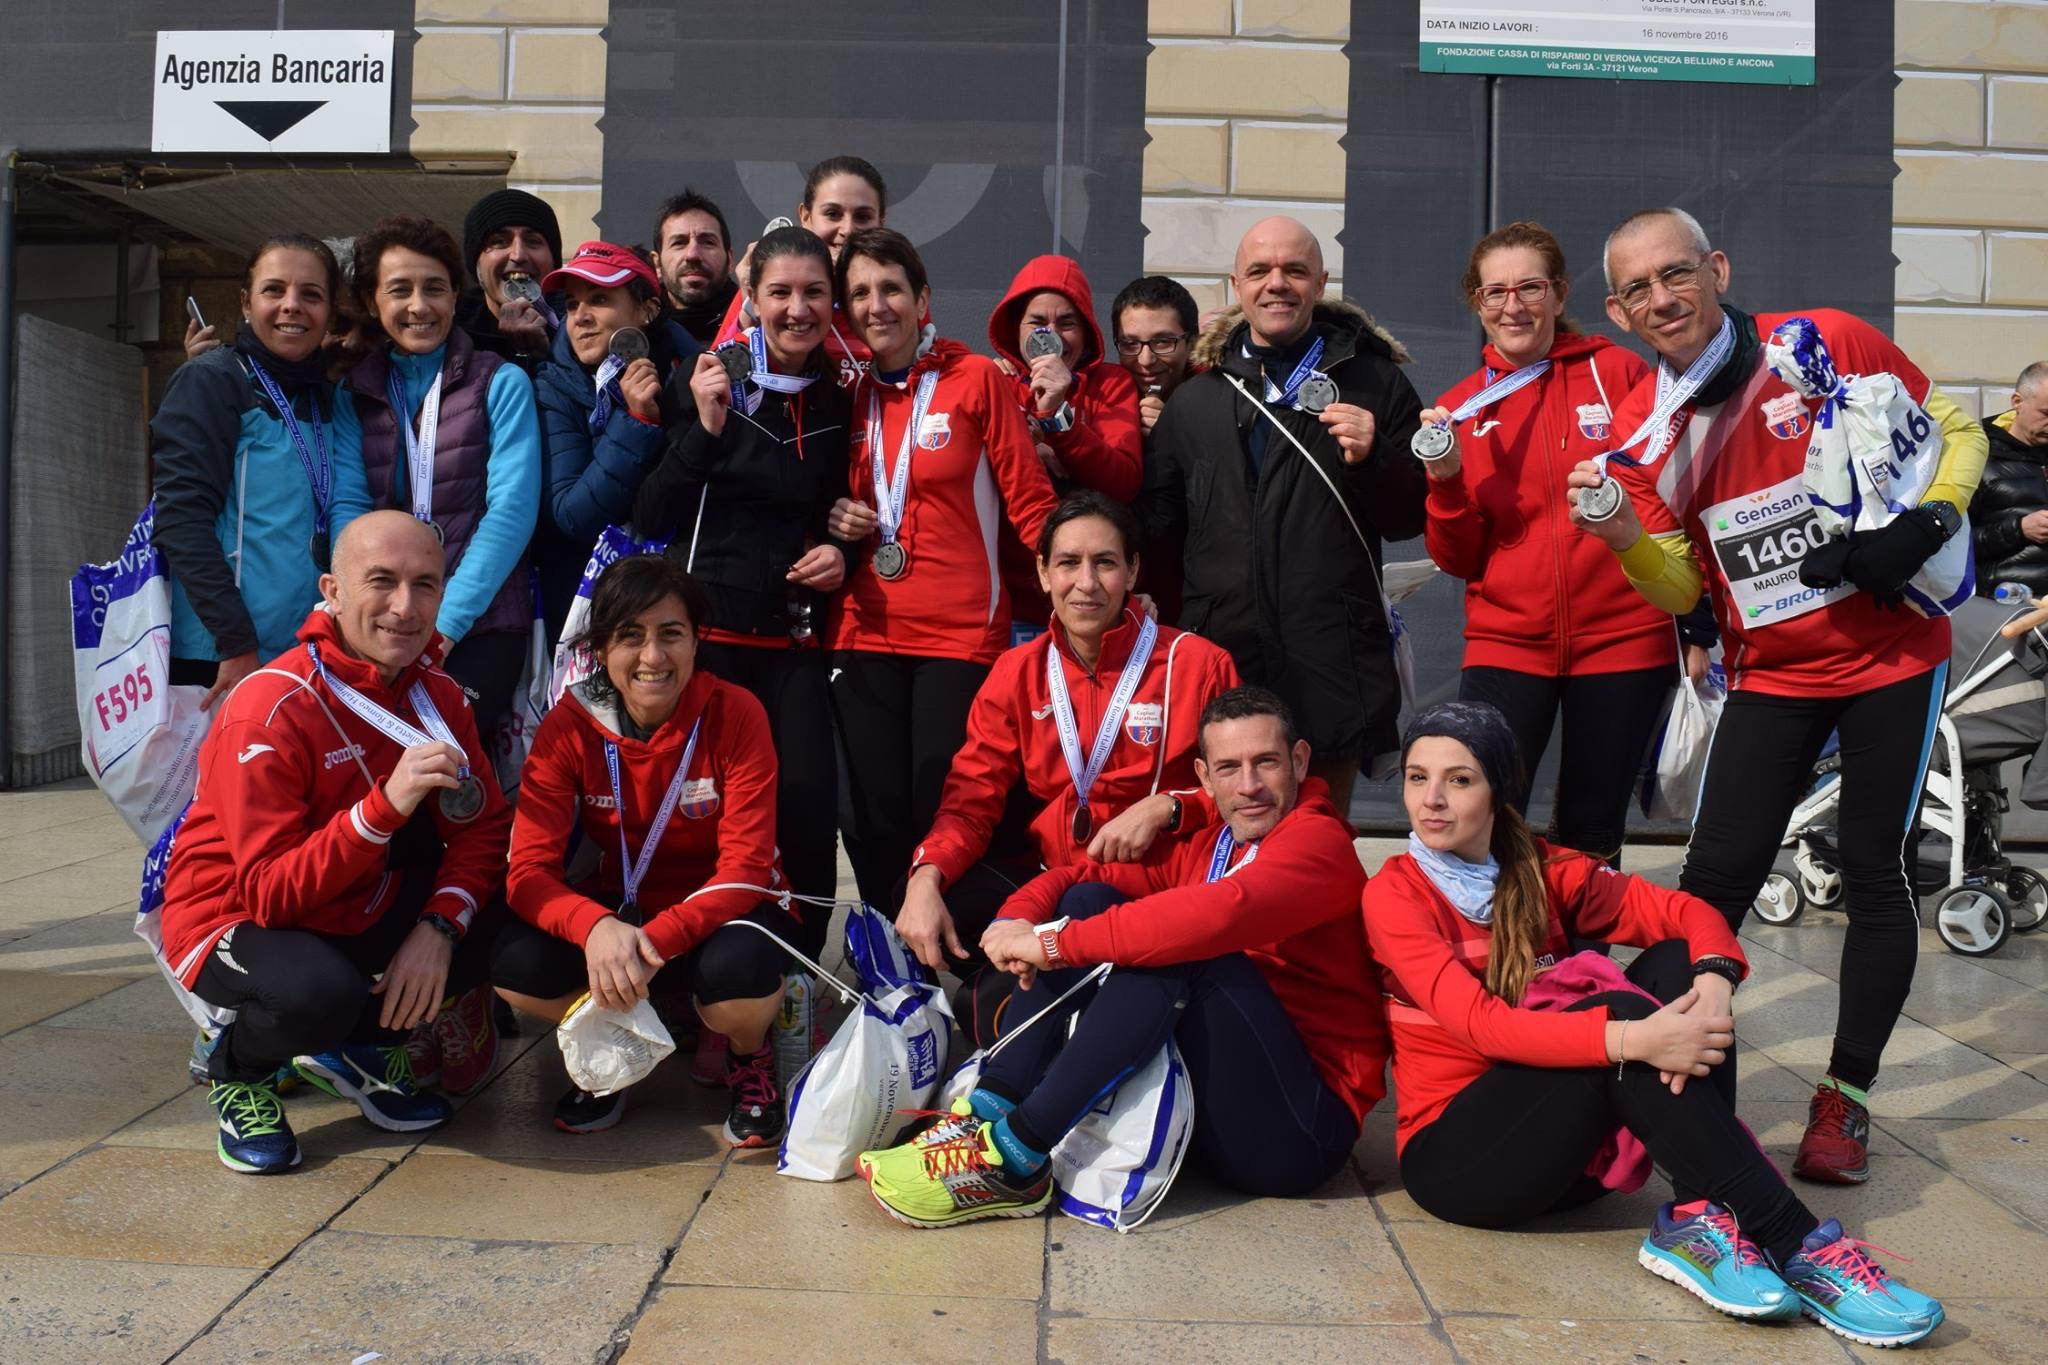 Foto da "Gruppi di Corsa - CagliariRespira - Mezza maratona città di Cagliari"